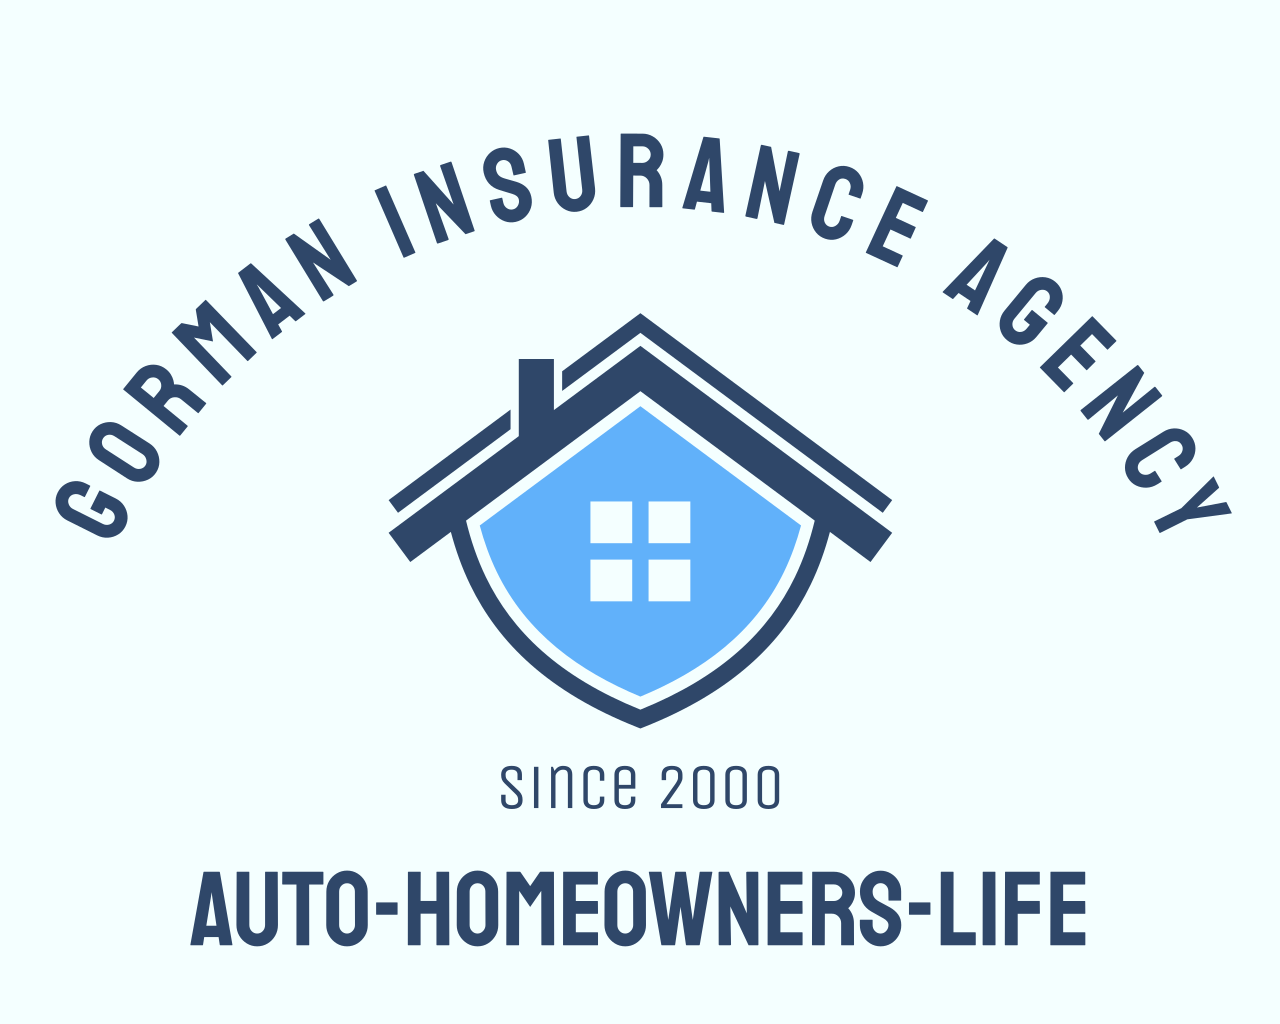 Gorman Insurance Agency's logo